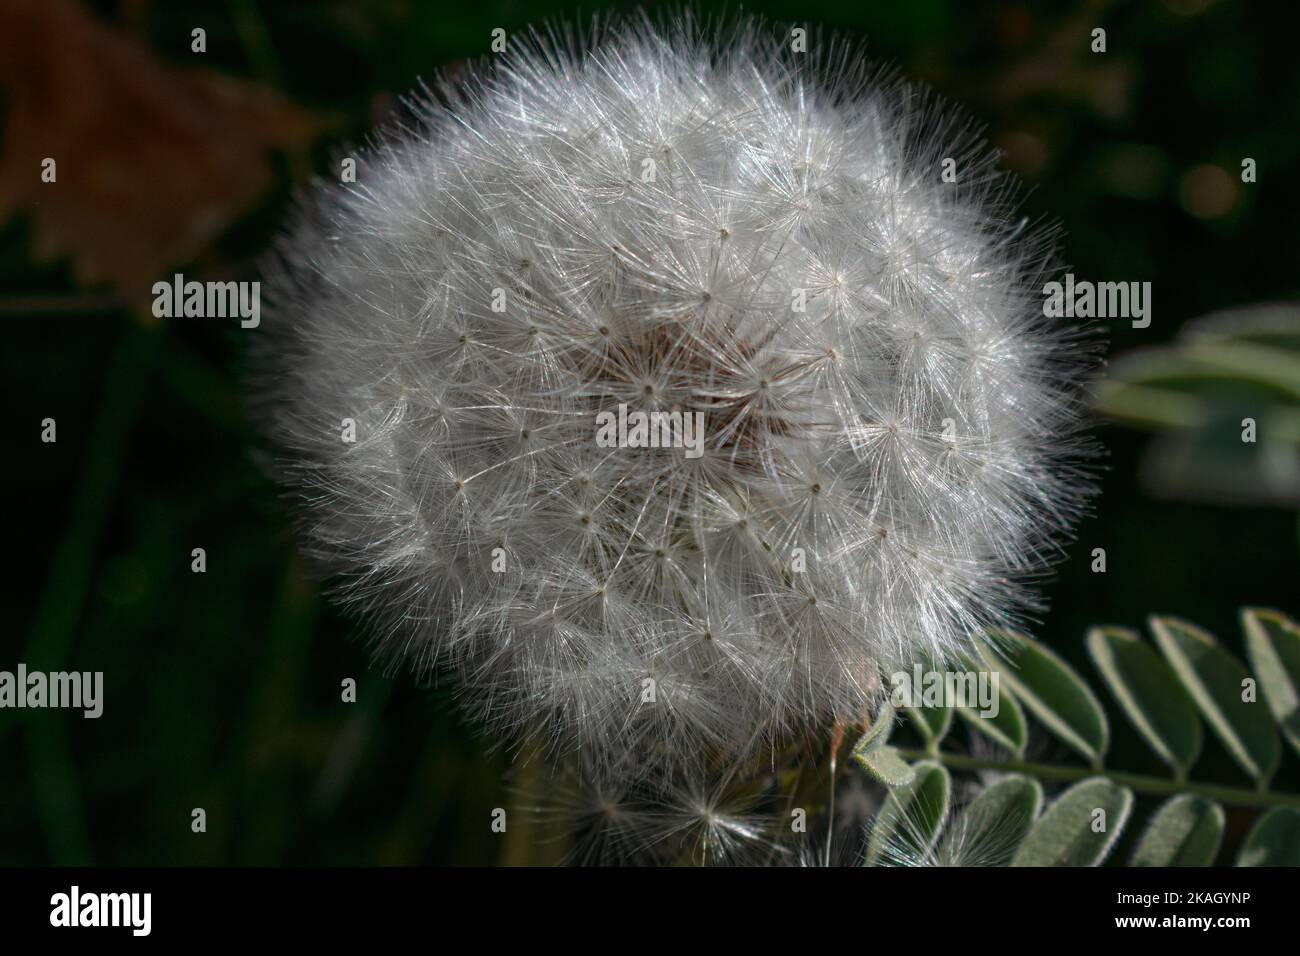 Anemone flower head Stock Photo